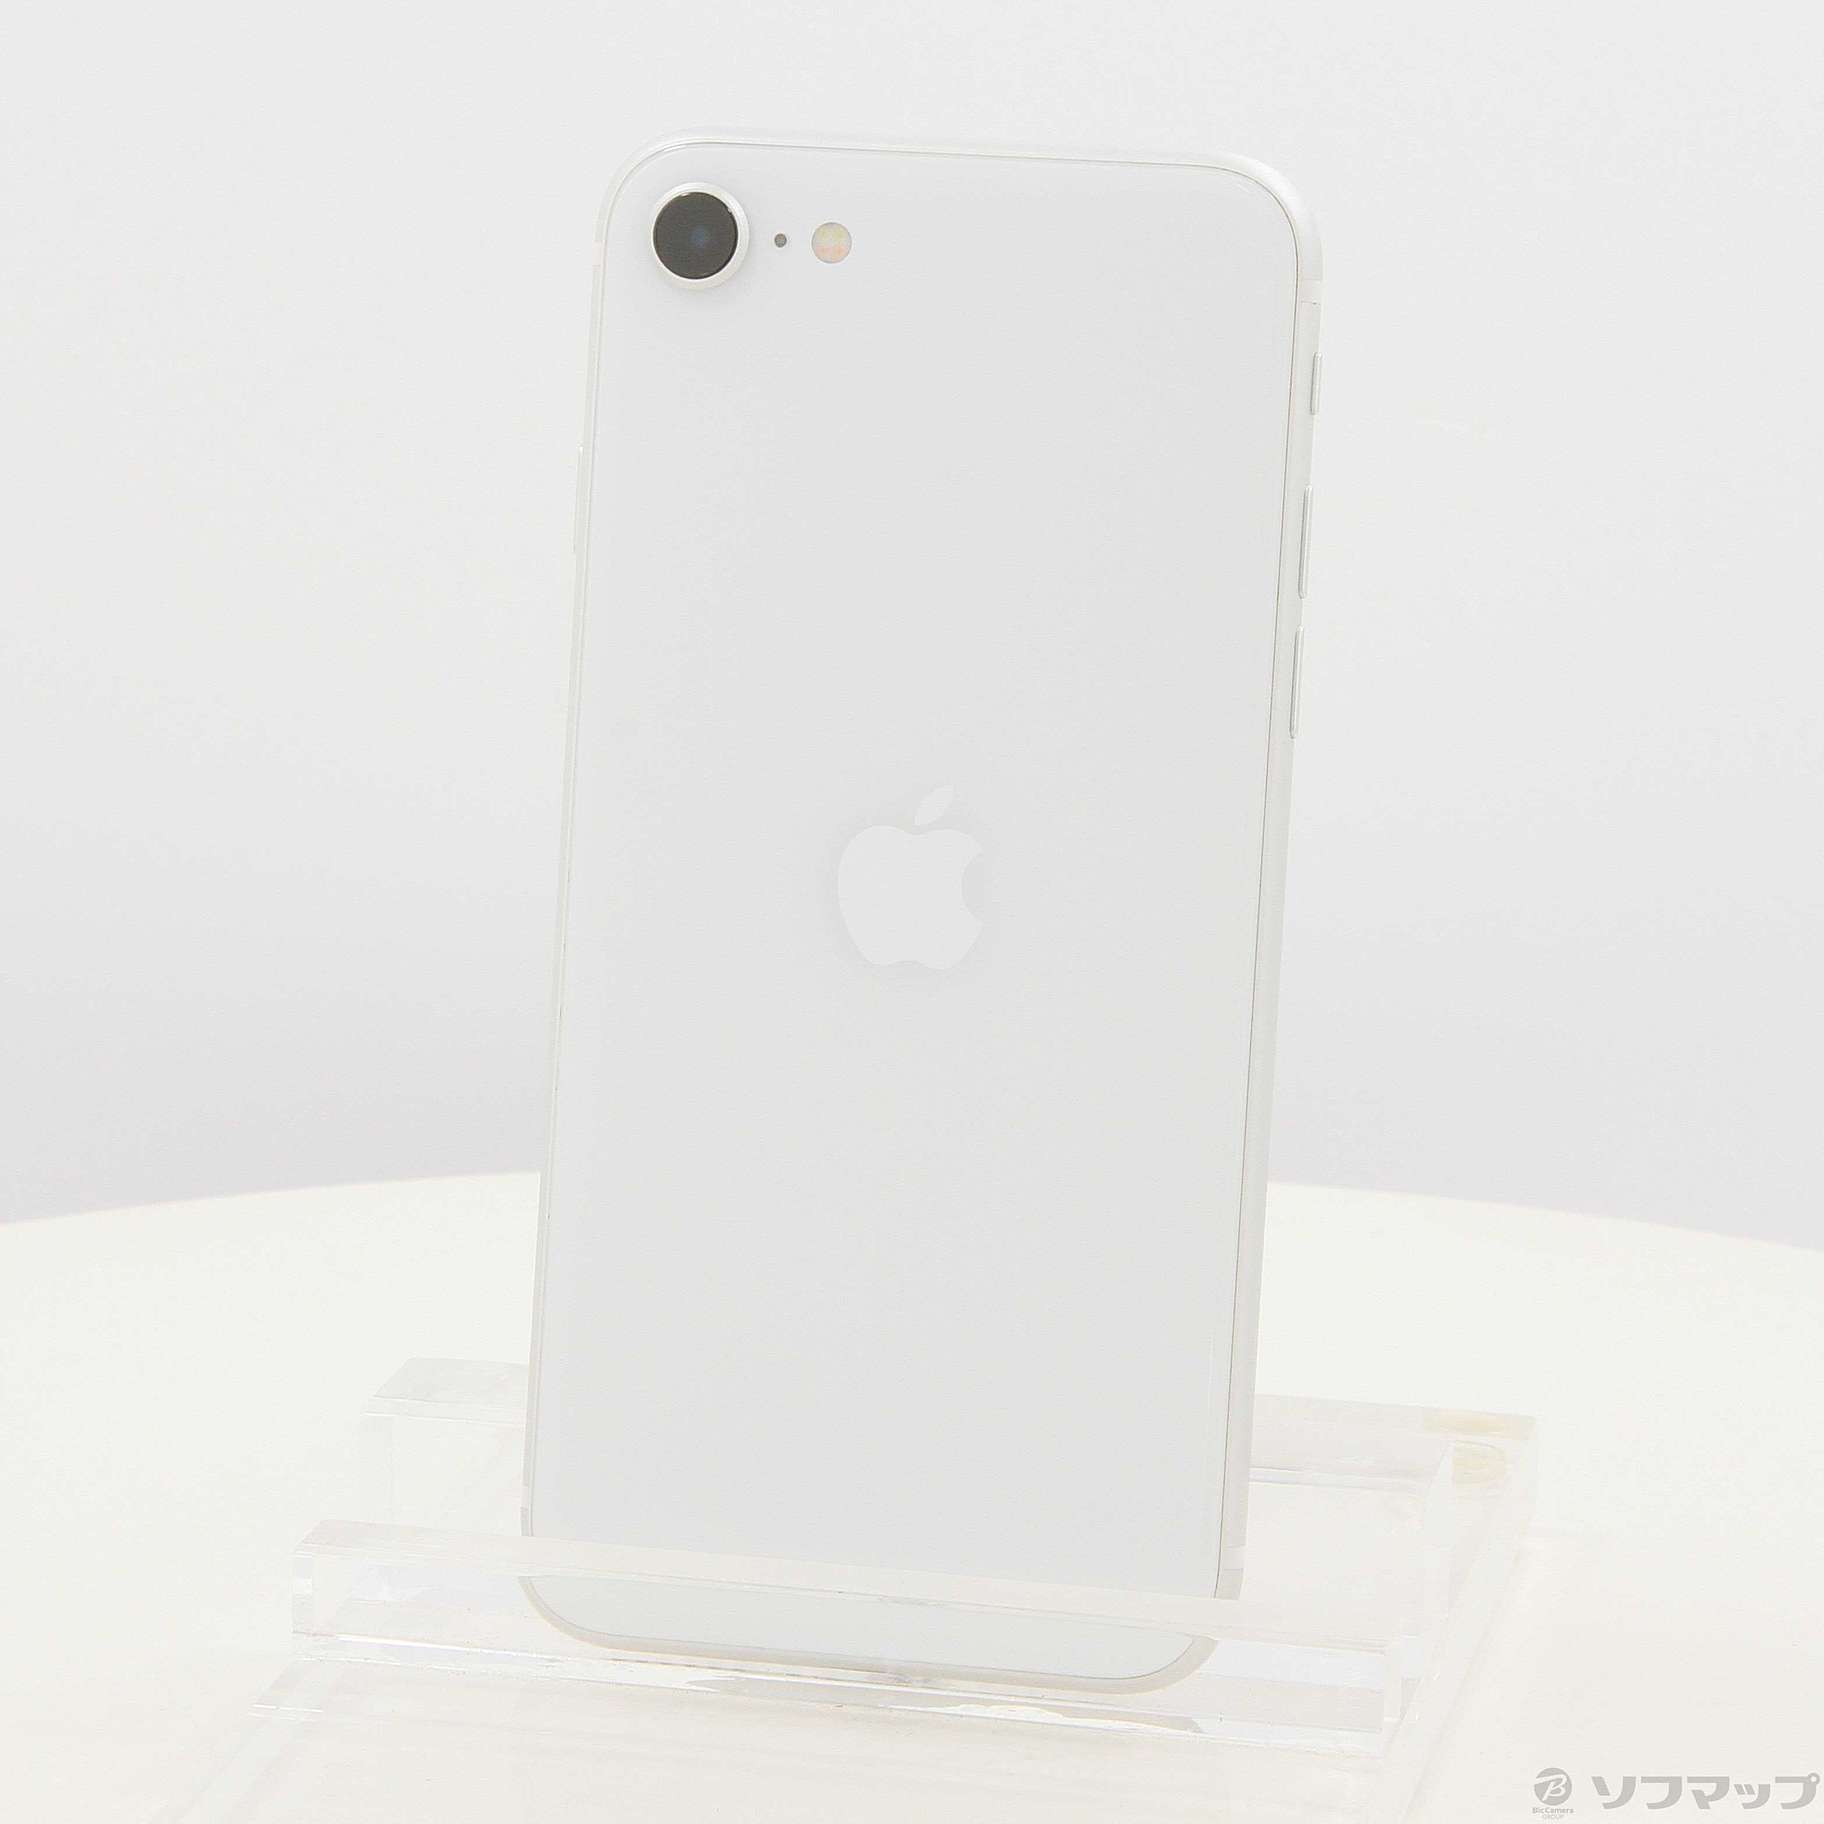 iPhone SE 第2世代 (SE2) ホワイト 64 GB SIMフリー - スマートフォン本体